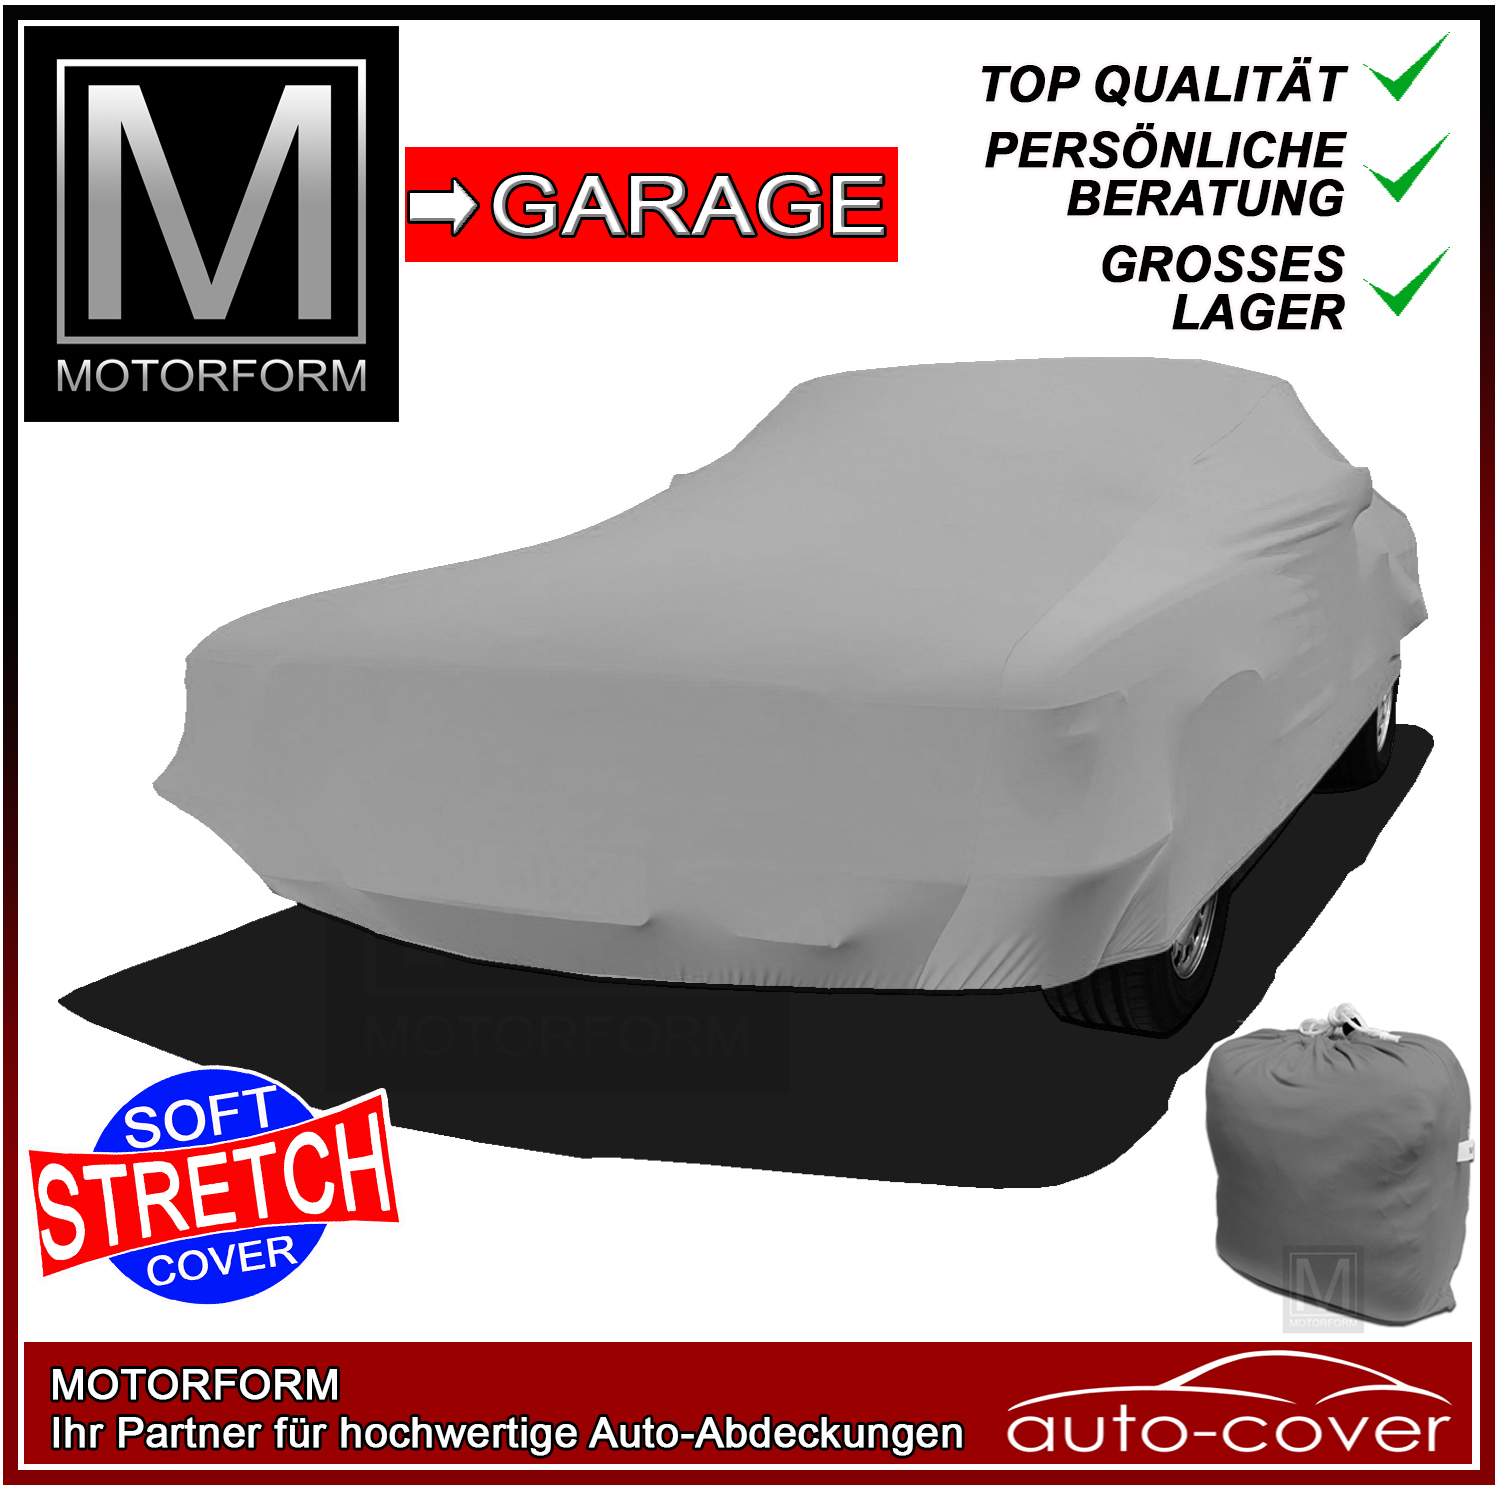 Grey Super Stretchy Cover for Mercedes W105 Ponton